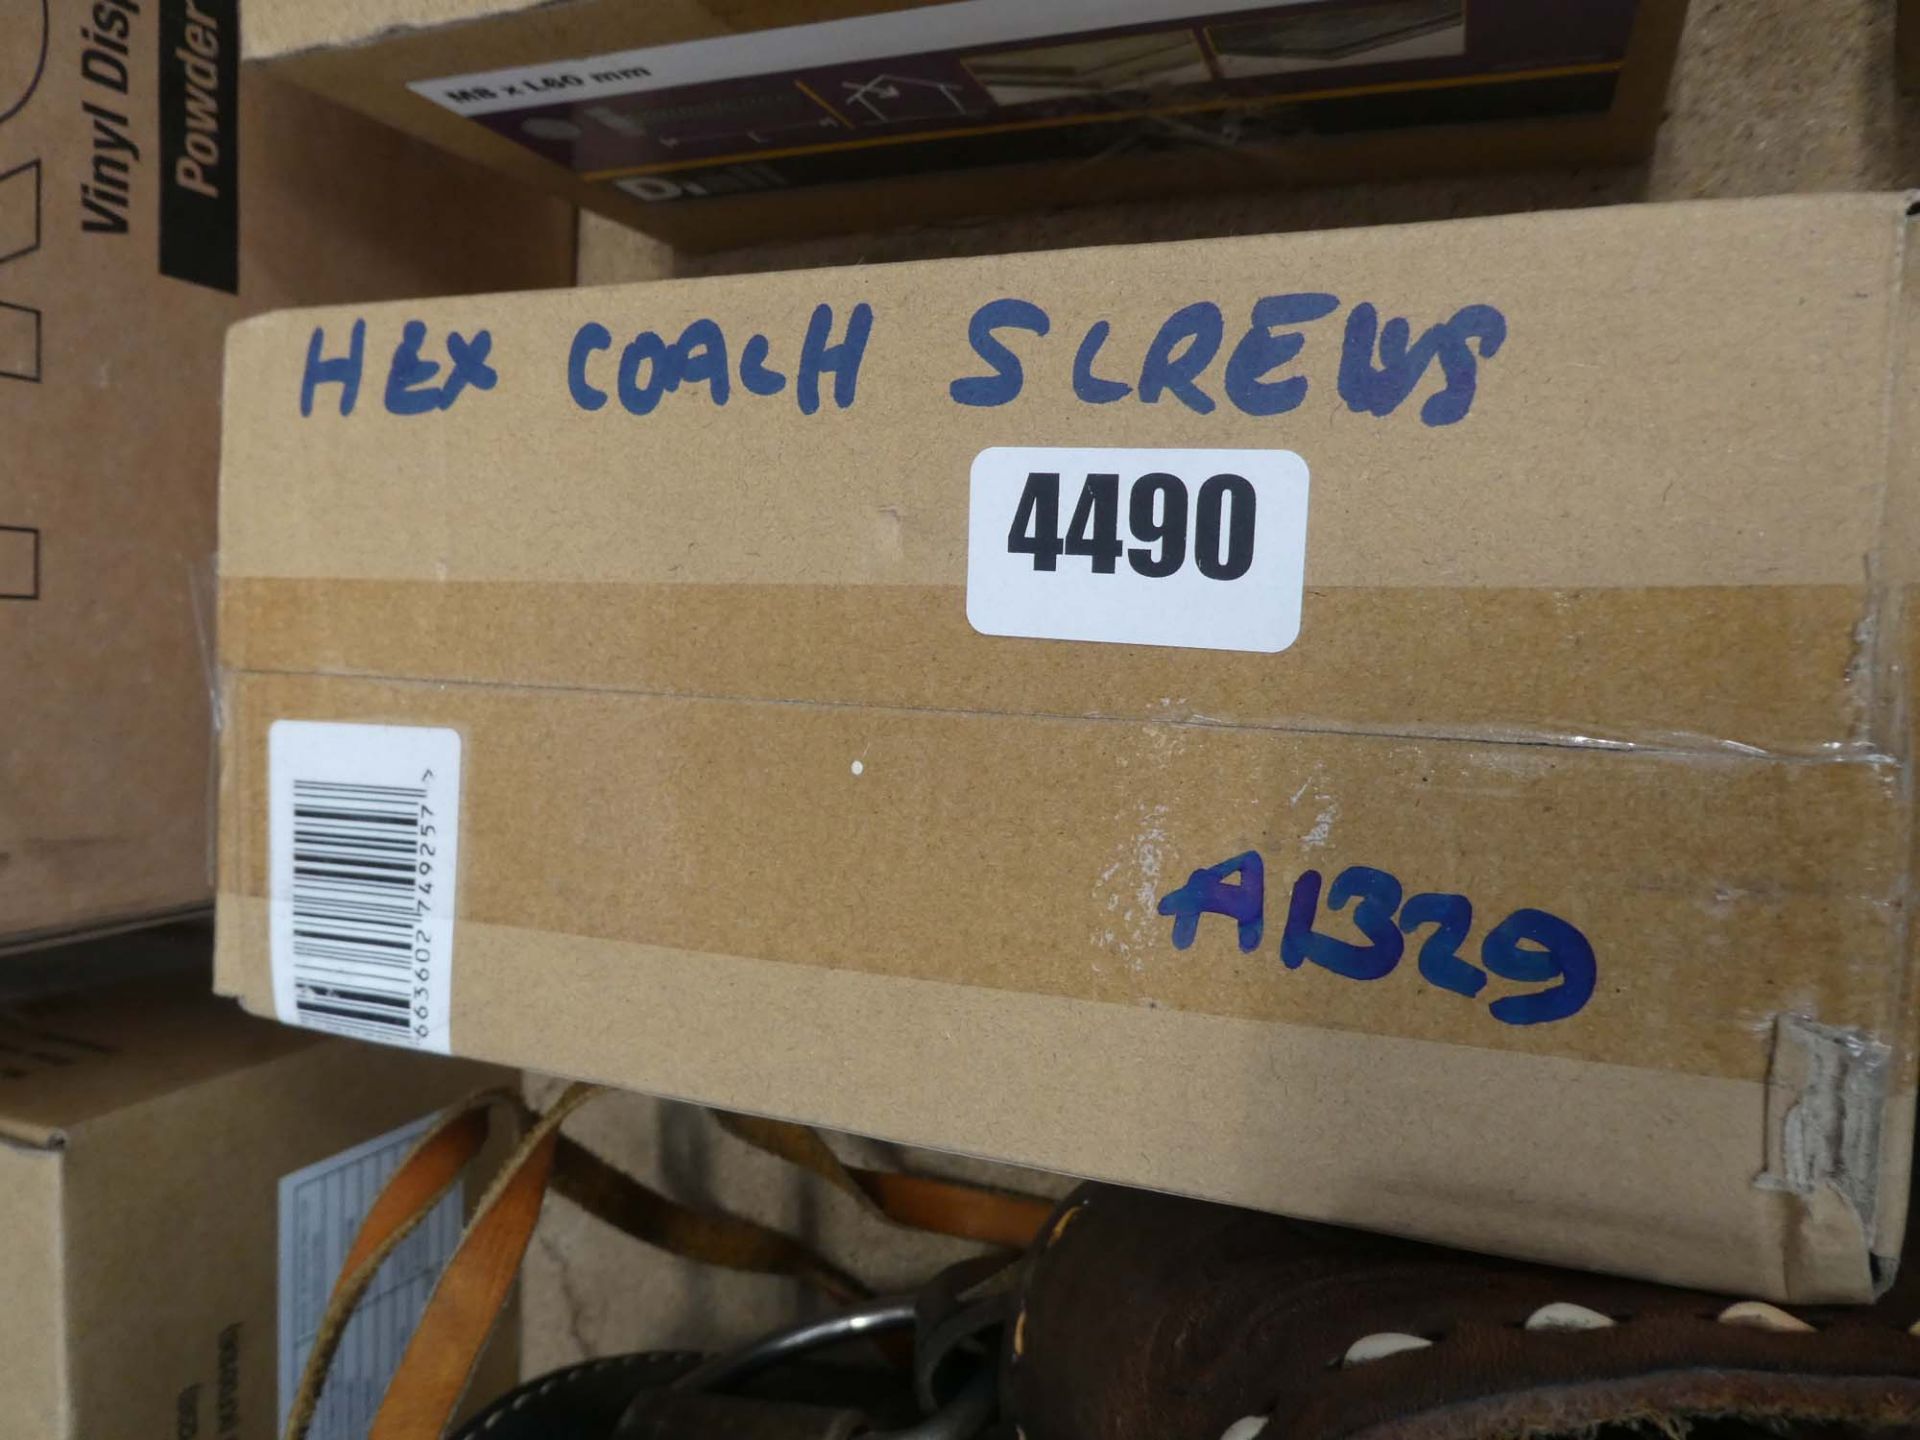 Box of hex coach screws